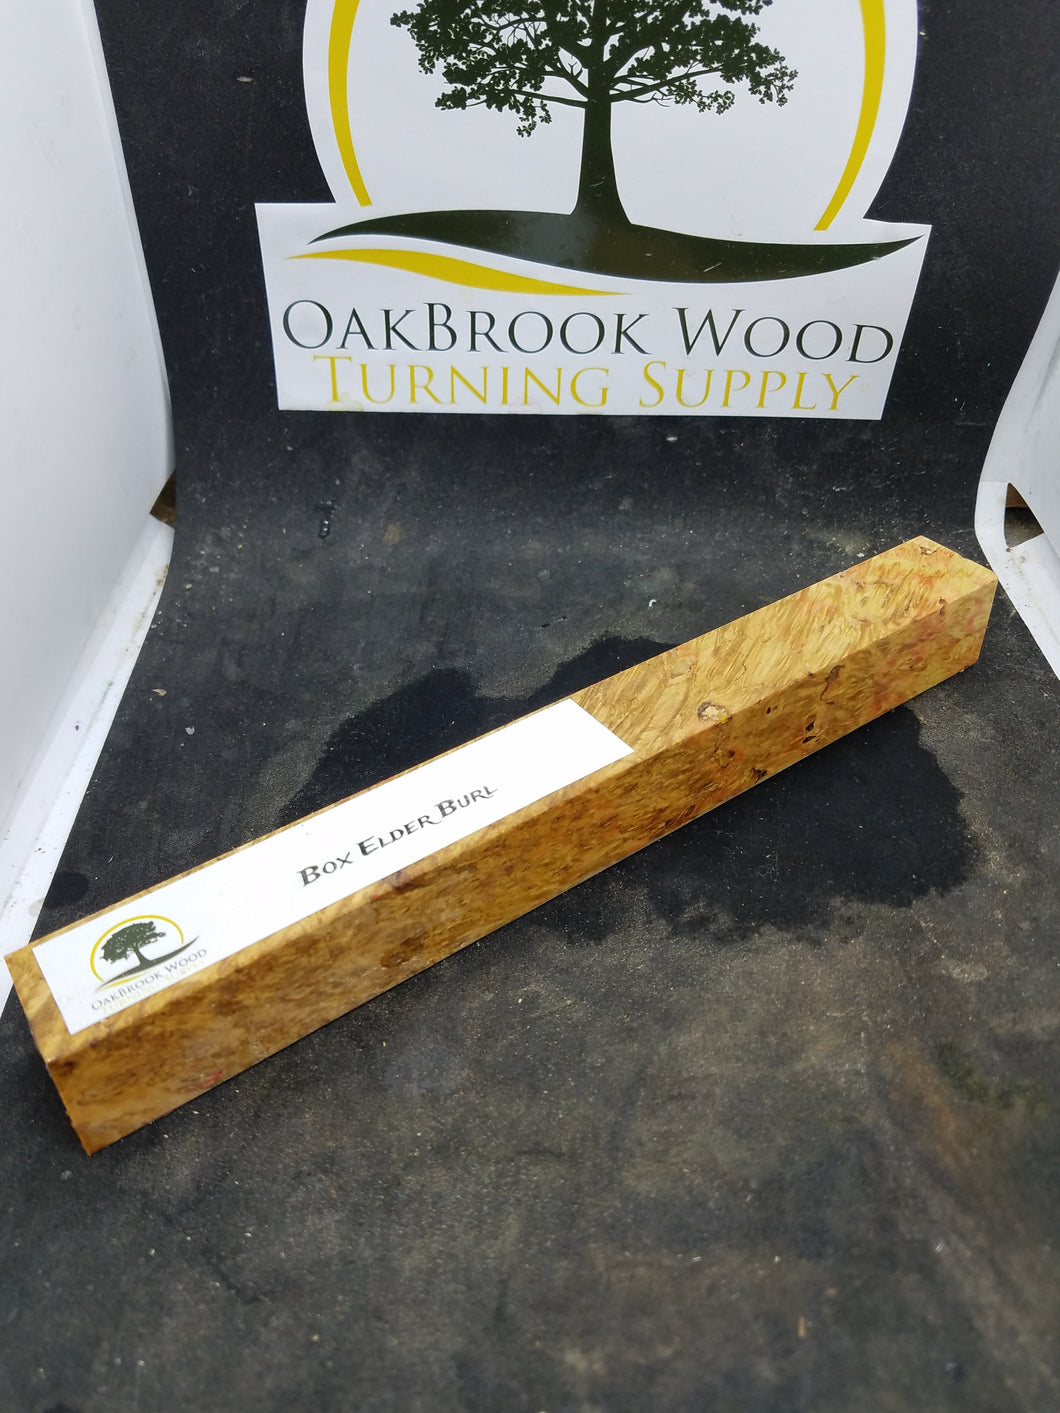 Box Elder burl - Oakbrook Wood Turning Supply